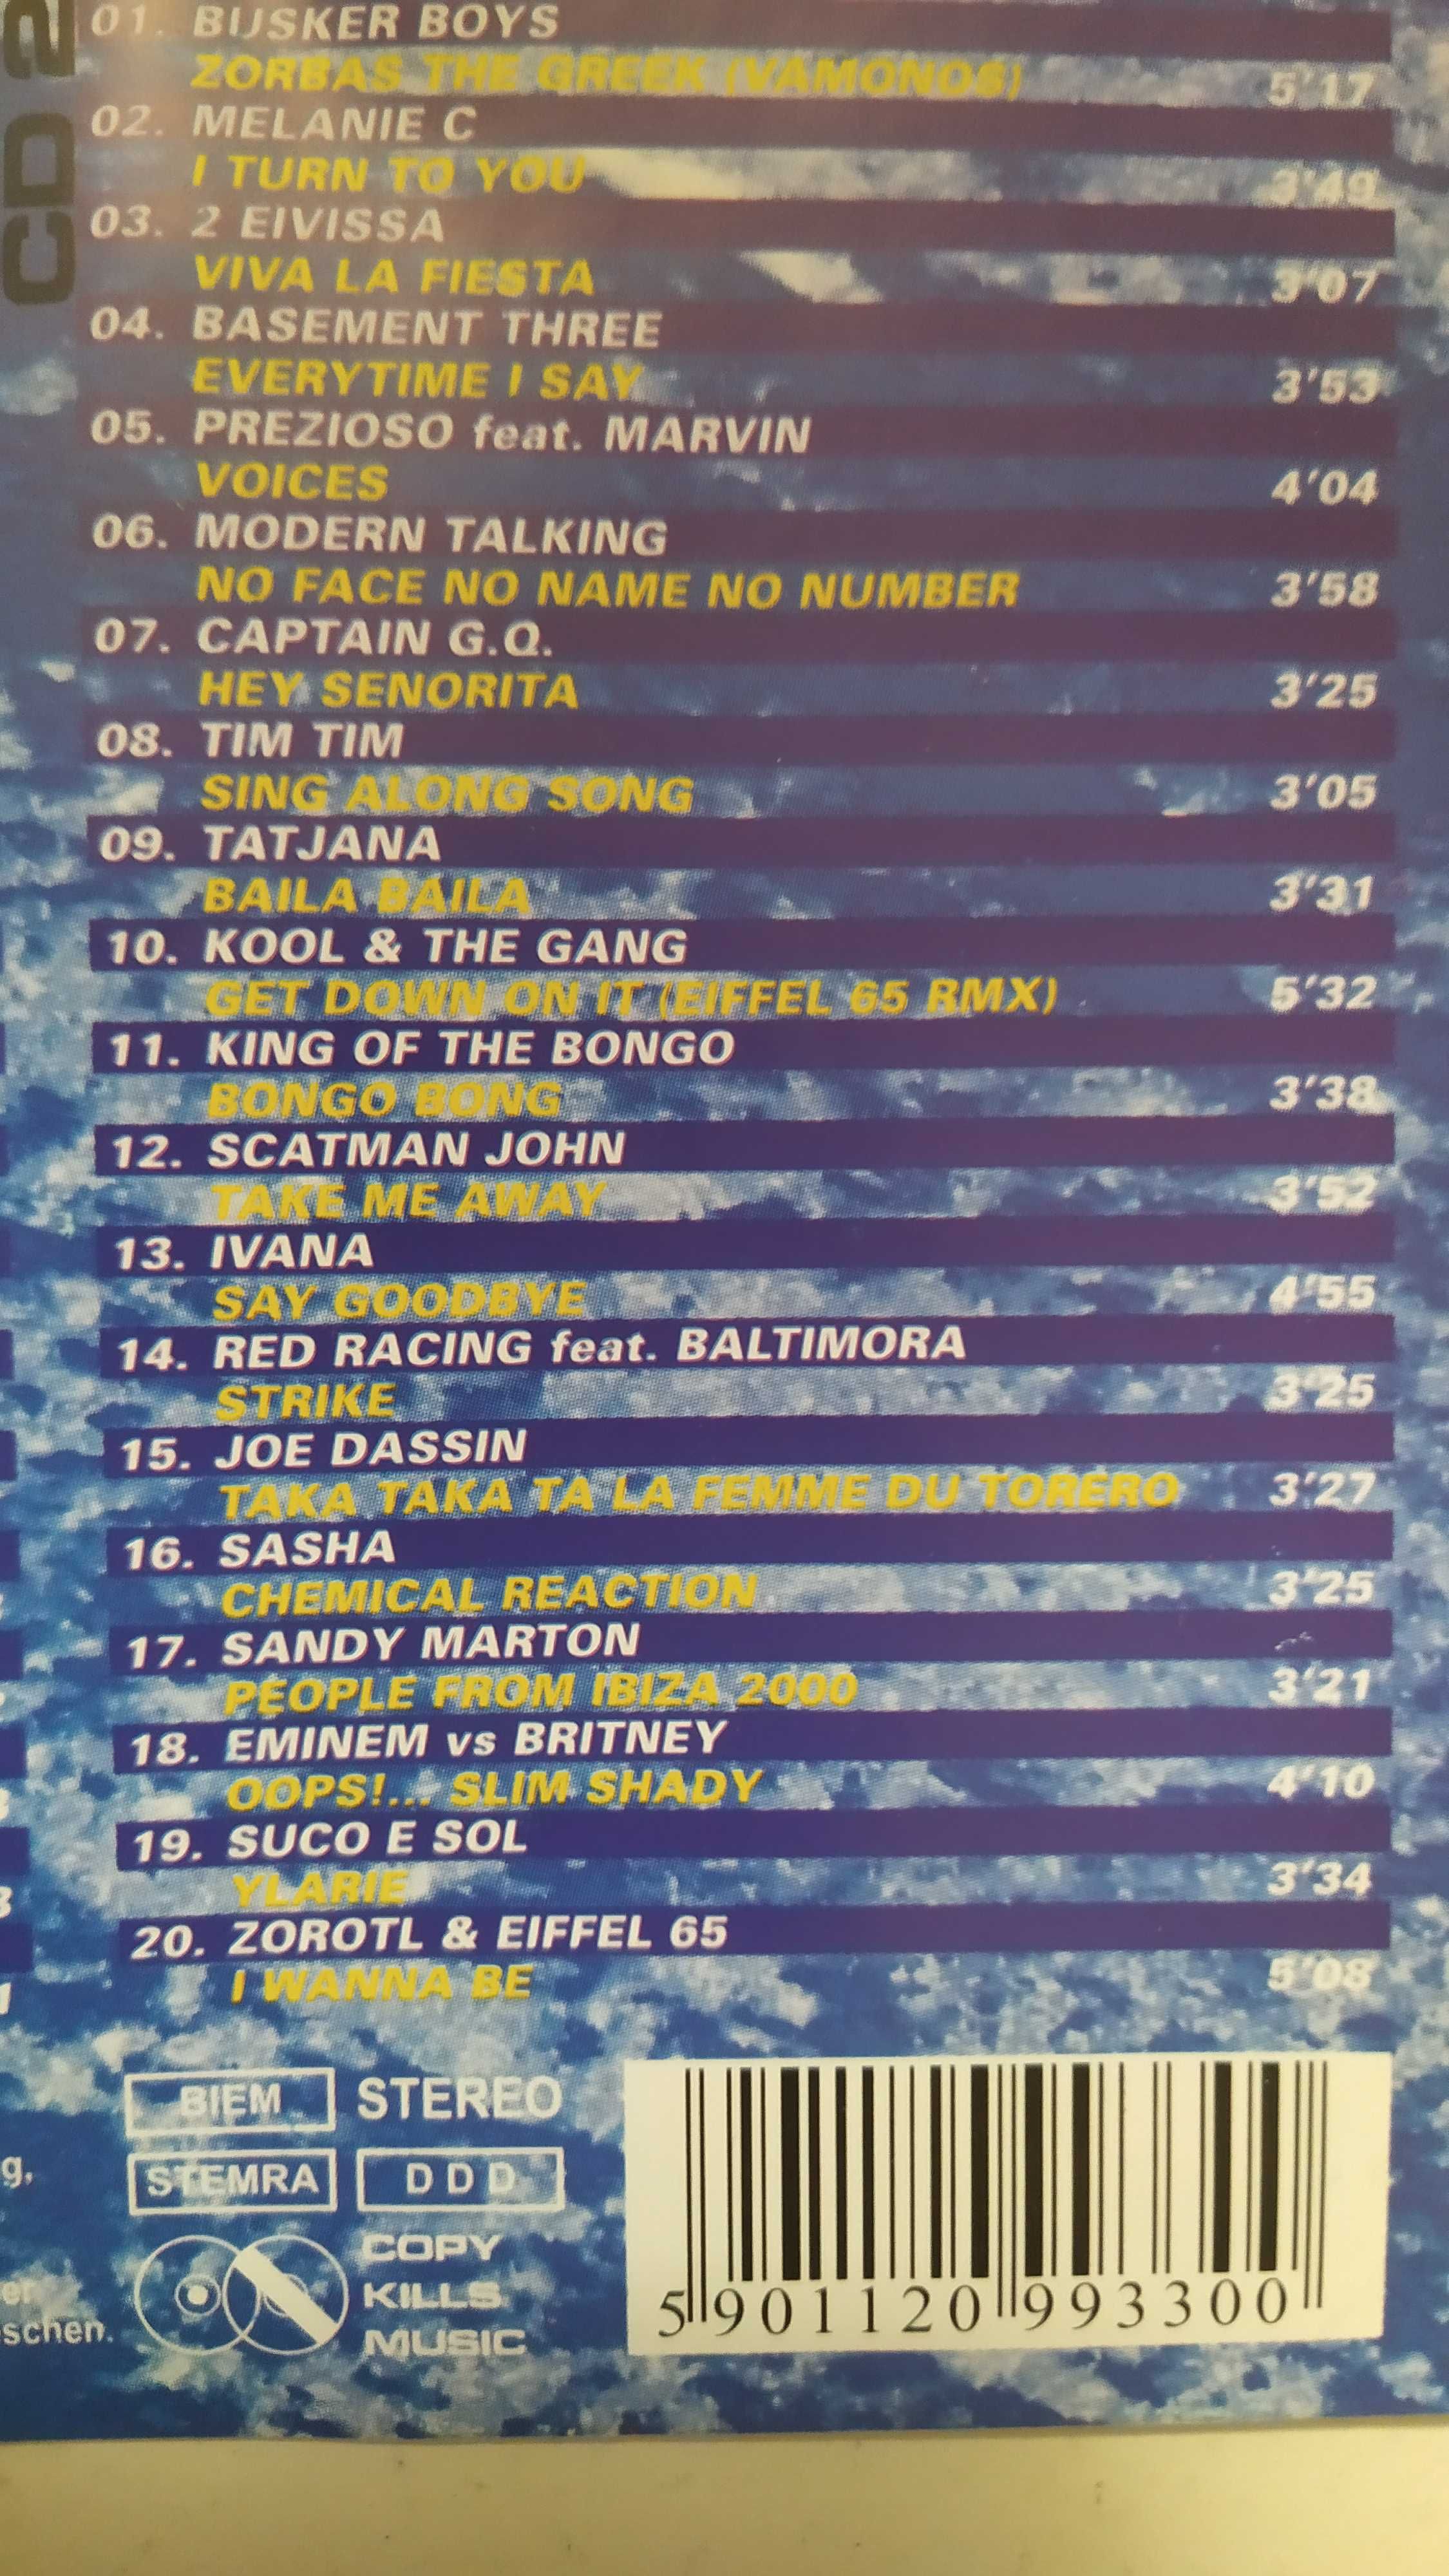 POPCORN Mega Dance Music 7/2000 2CD Anastacia Sasha